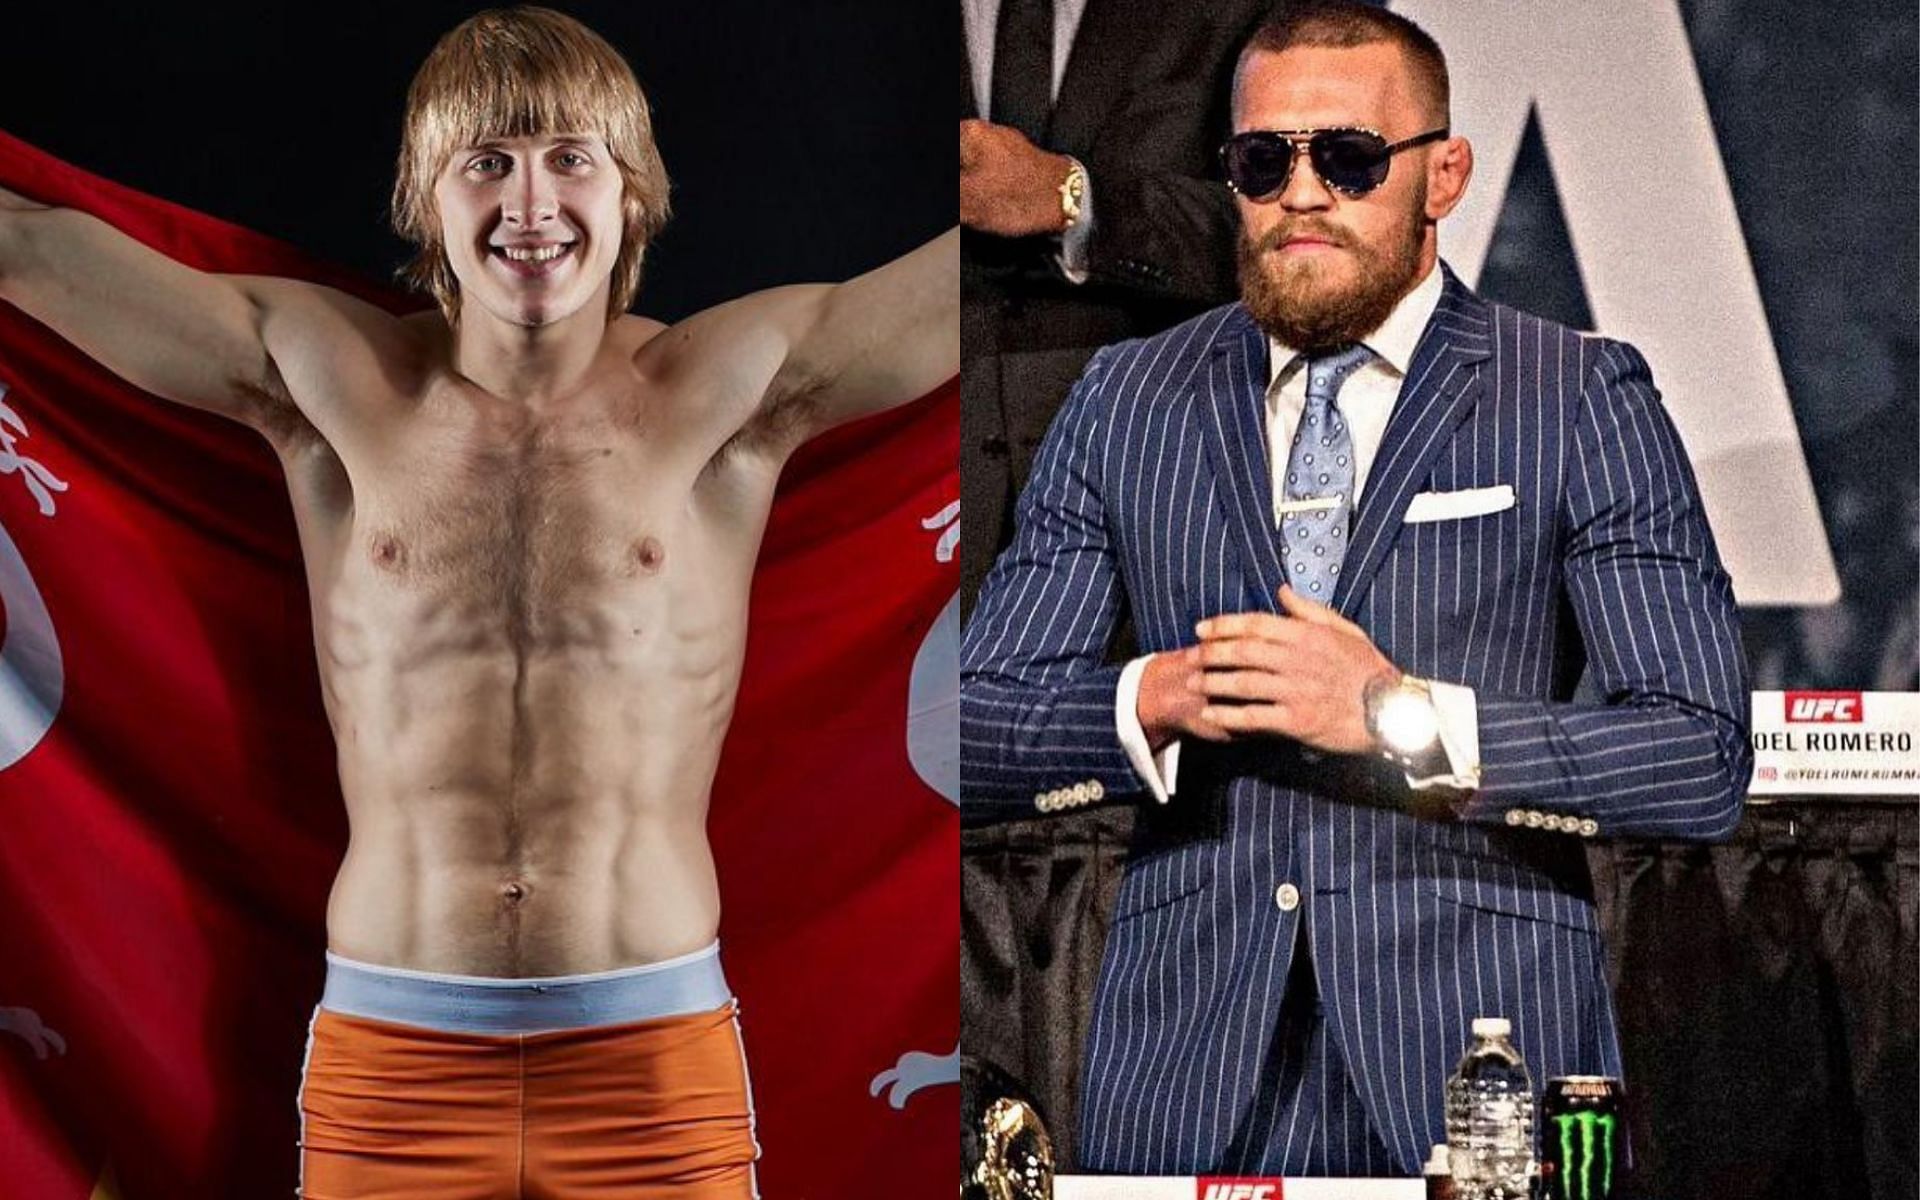 Paddy Pimblett (left) via @MMAFighting on Twitter and Conor McGregor (right) via @thenotoriousmma on Instagram